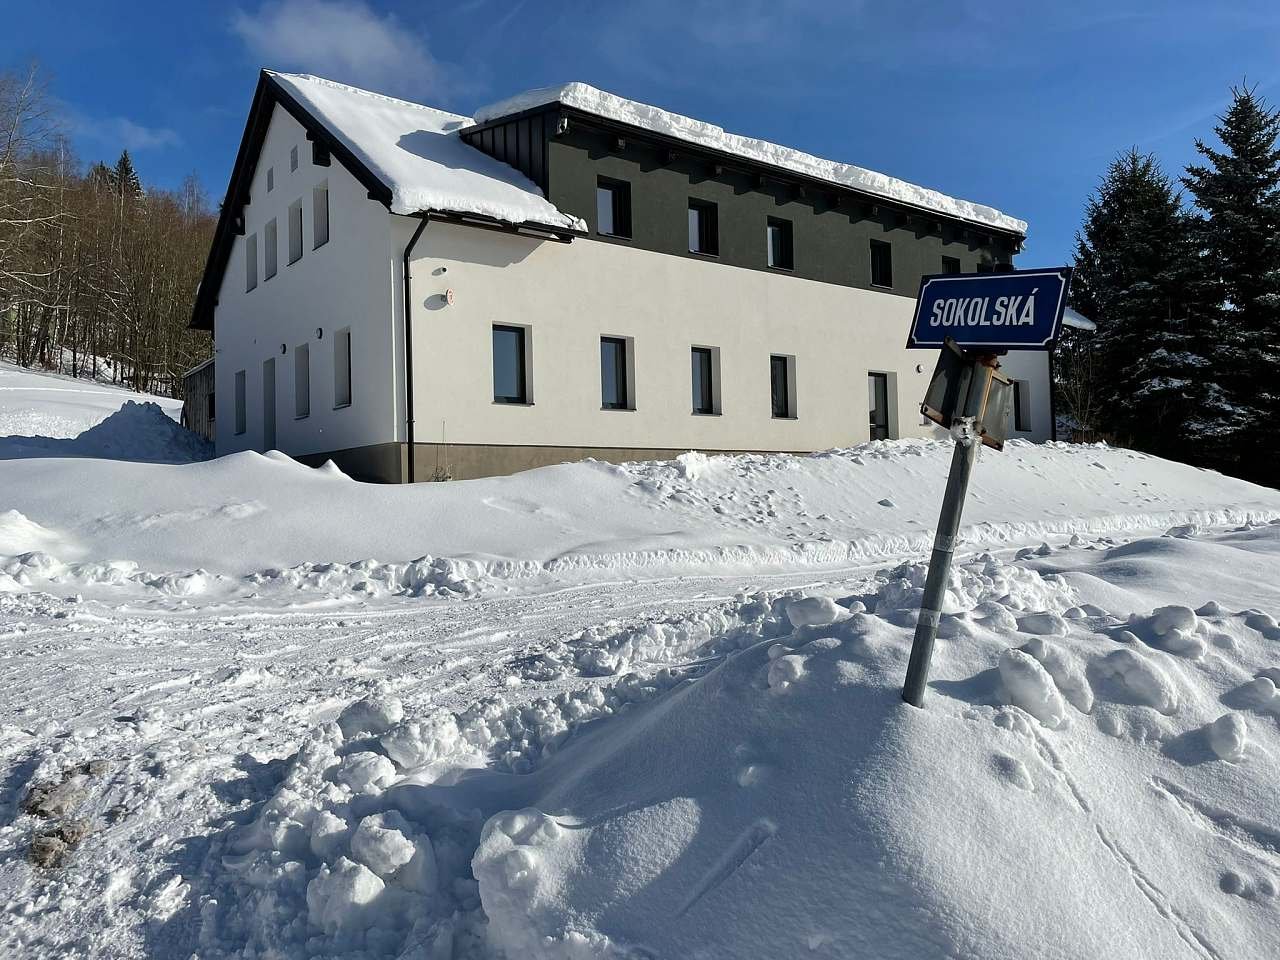 Chata Sokolská på vintern